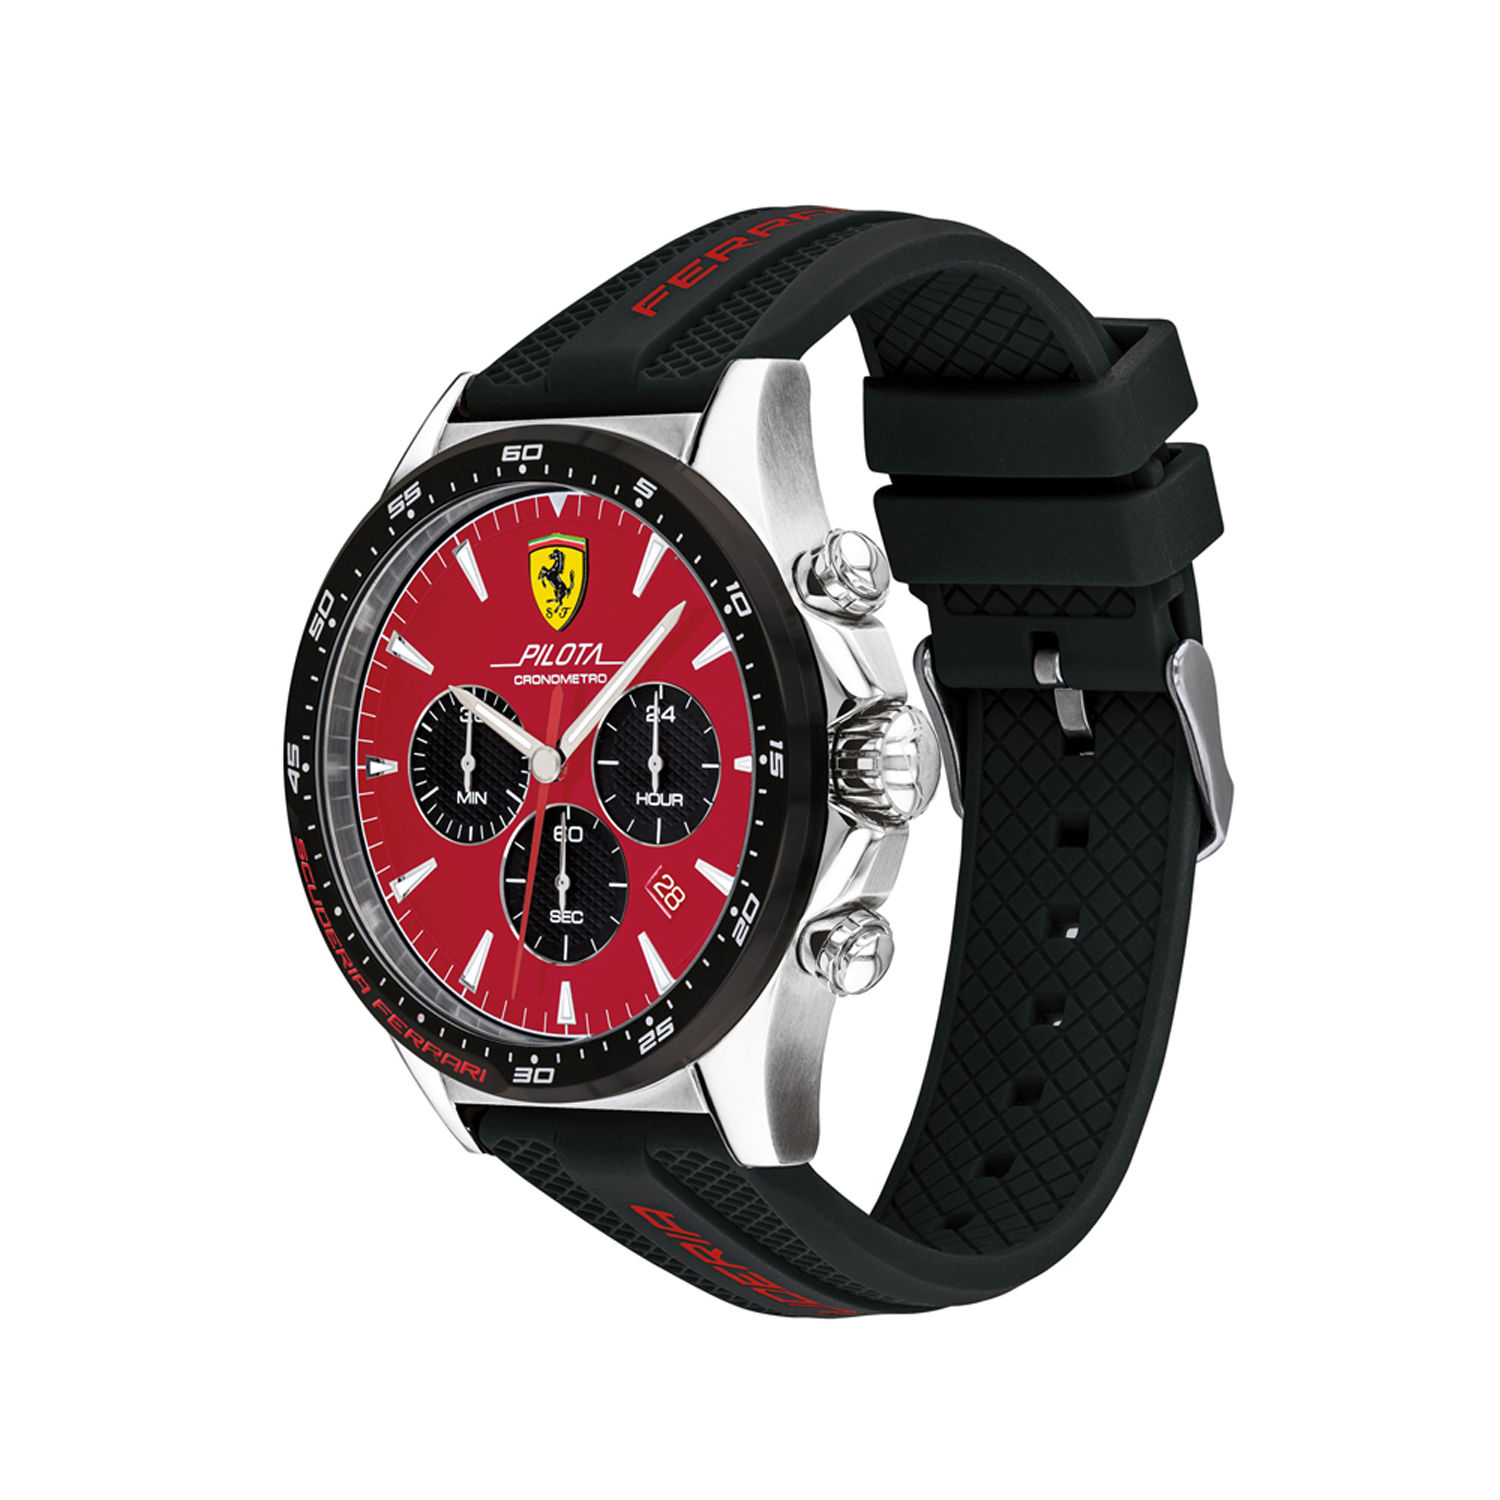 Scuderia Ferrari Pilota 0830595 Red Dial Analog Watch For Men: Buy ...